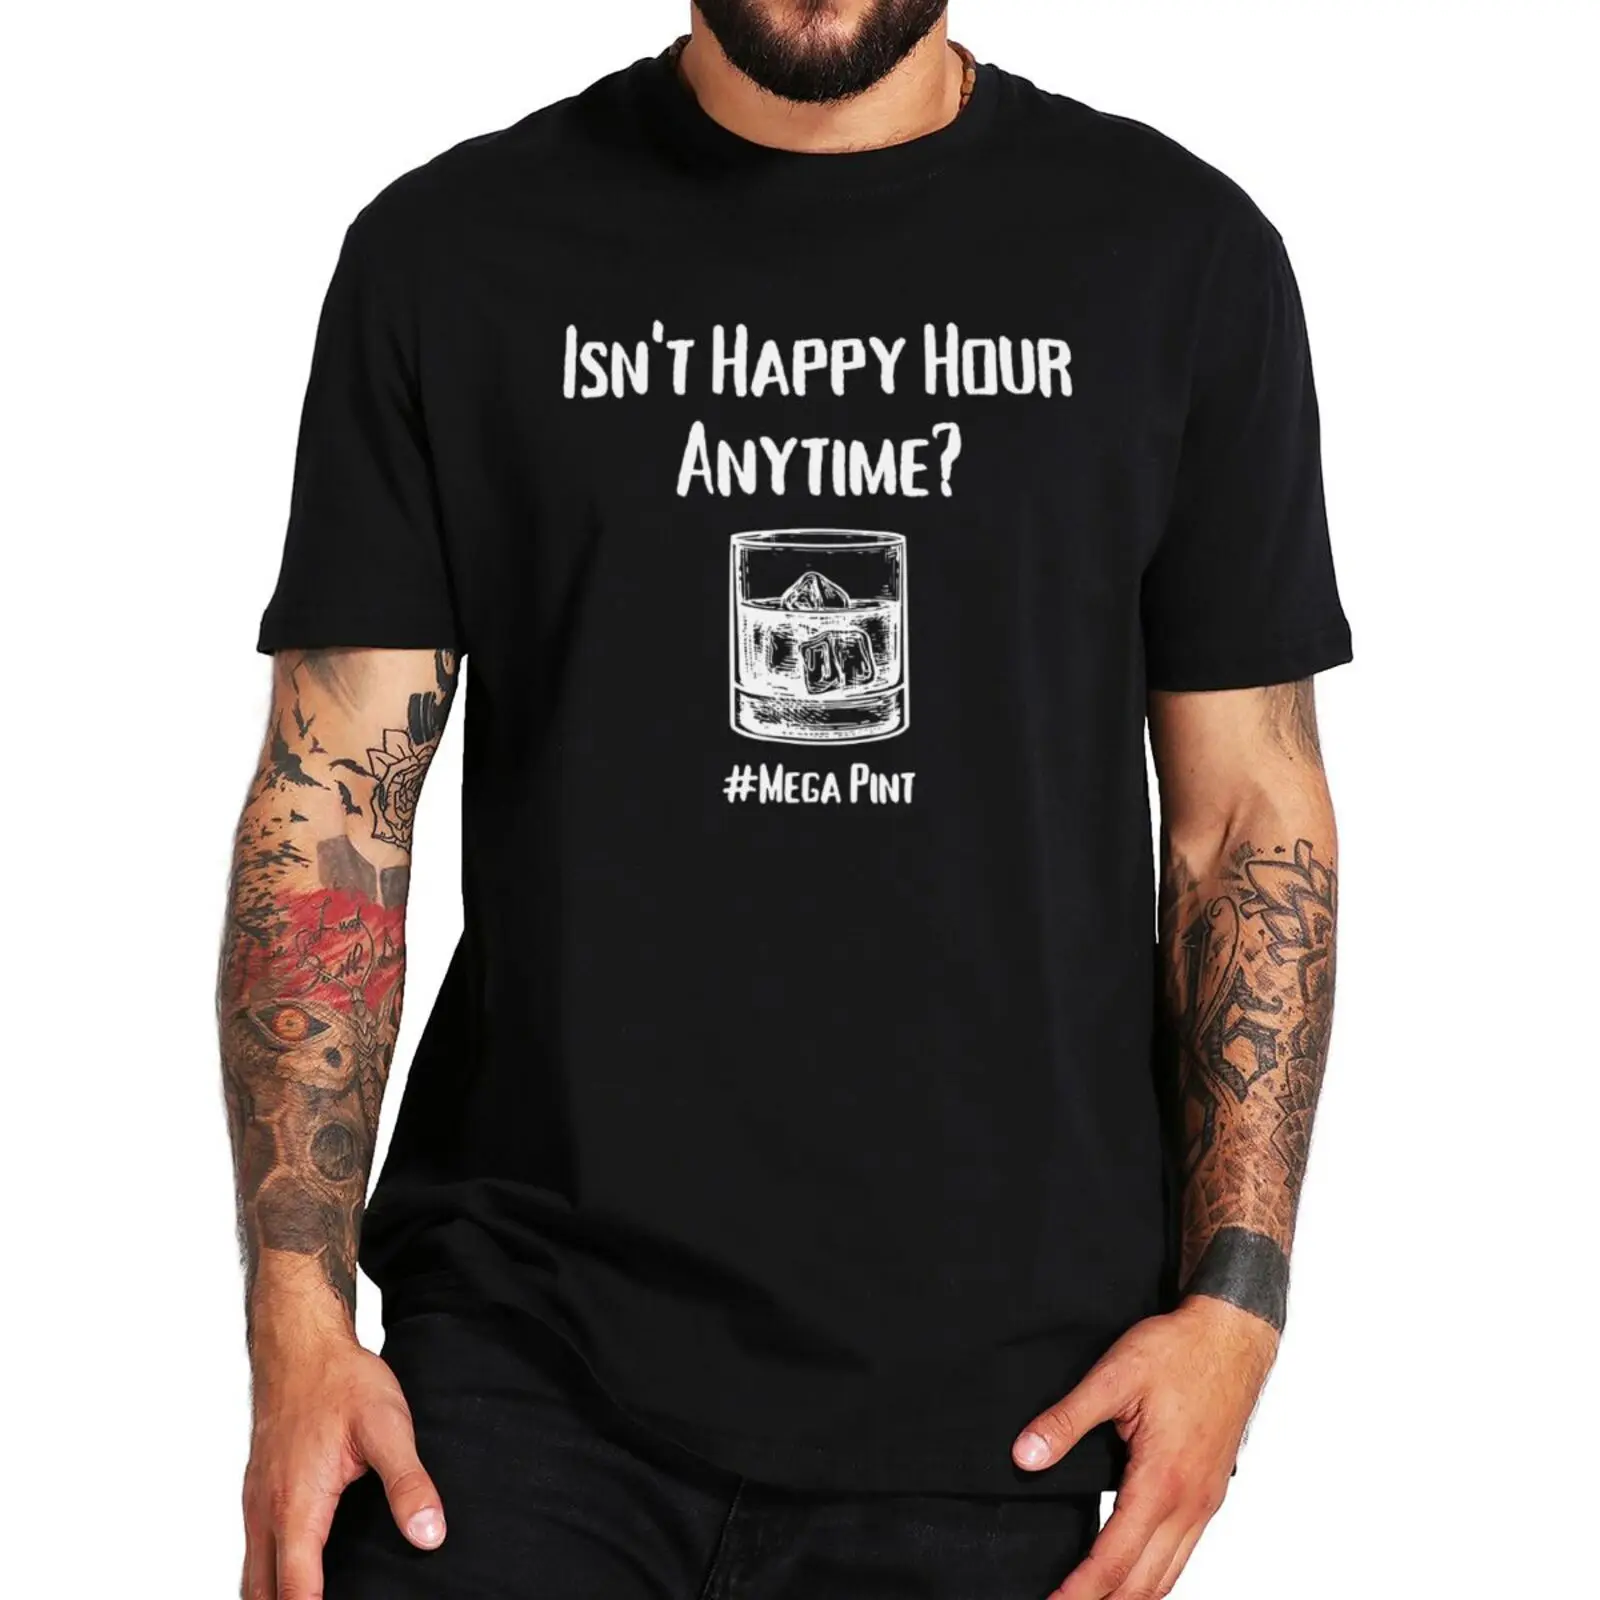 

Isn't Happy Hour Anytime Mega Pint T-Shirt 2022 New Funny Memes Humor Jokes Tee Summer 100% Cotton Soft T Shirt